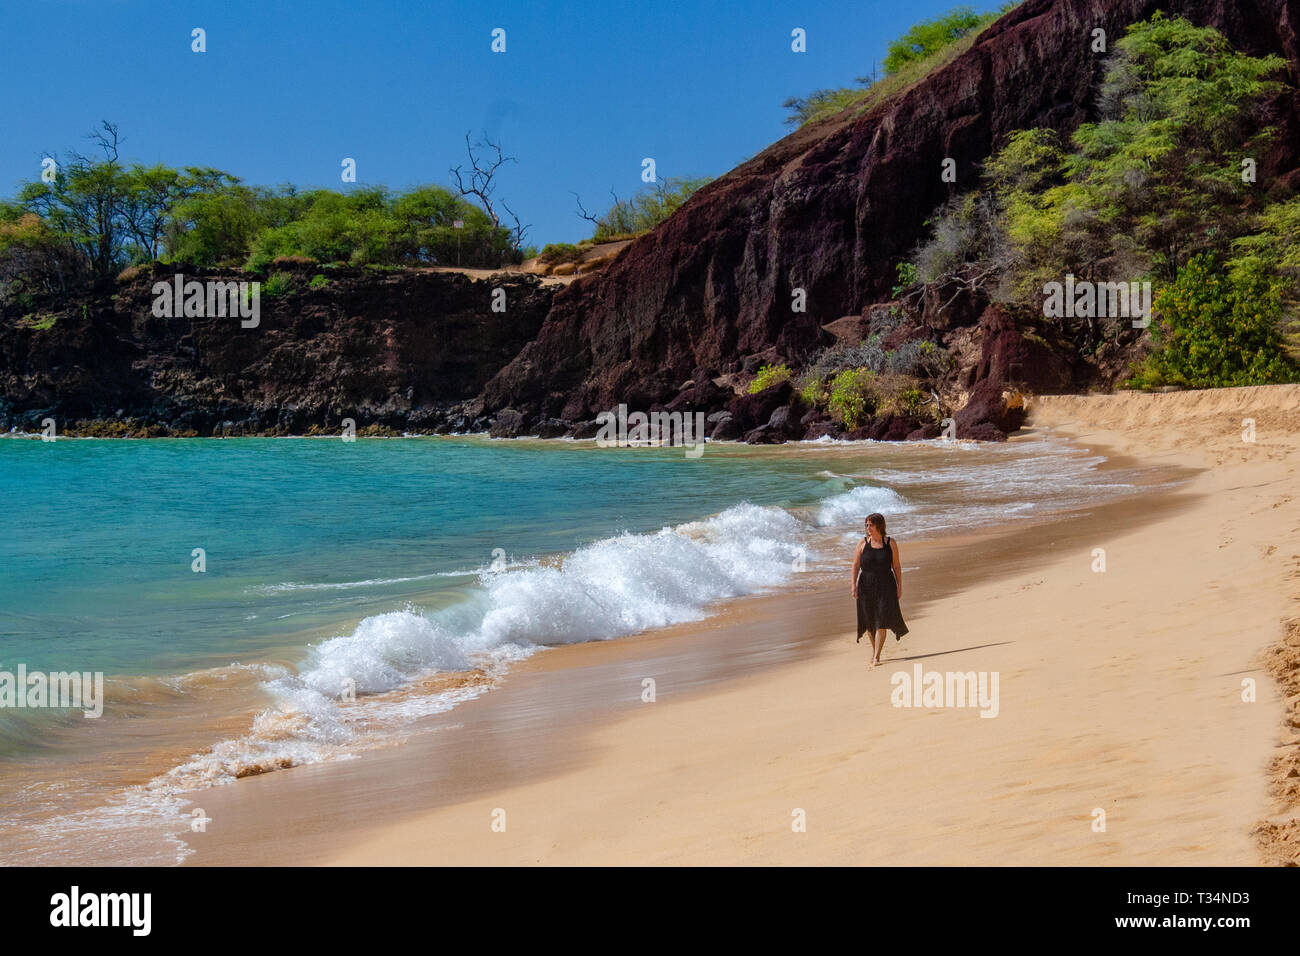 Woman walking along beach, Maui, Hawaii, United States Stock Photo